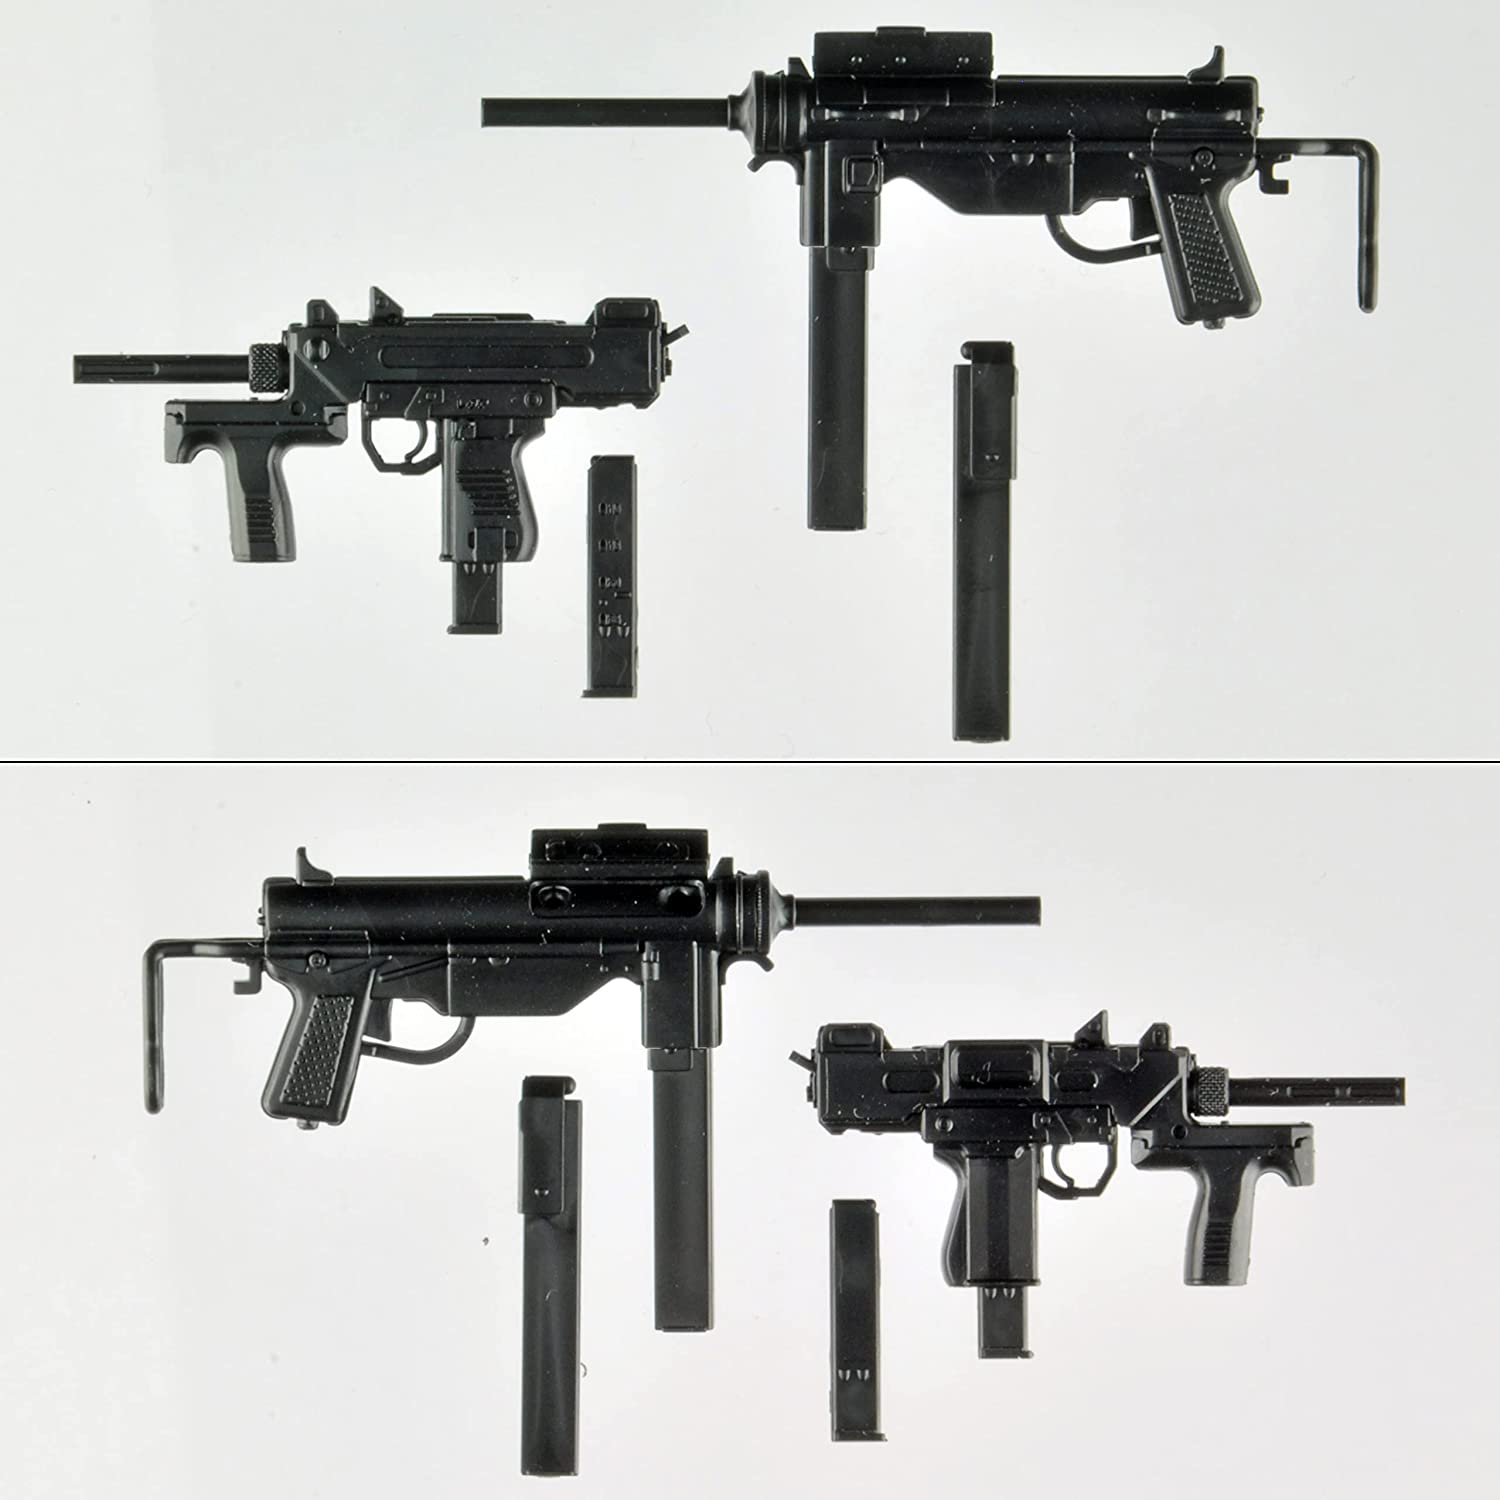 320982 1/12 Little Armory (LABC03) Submachine Gun